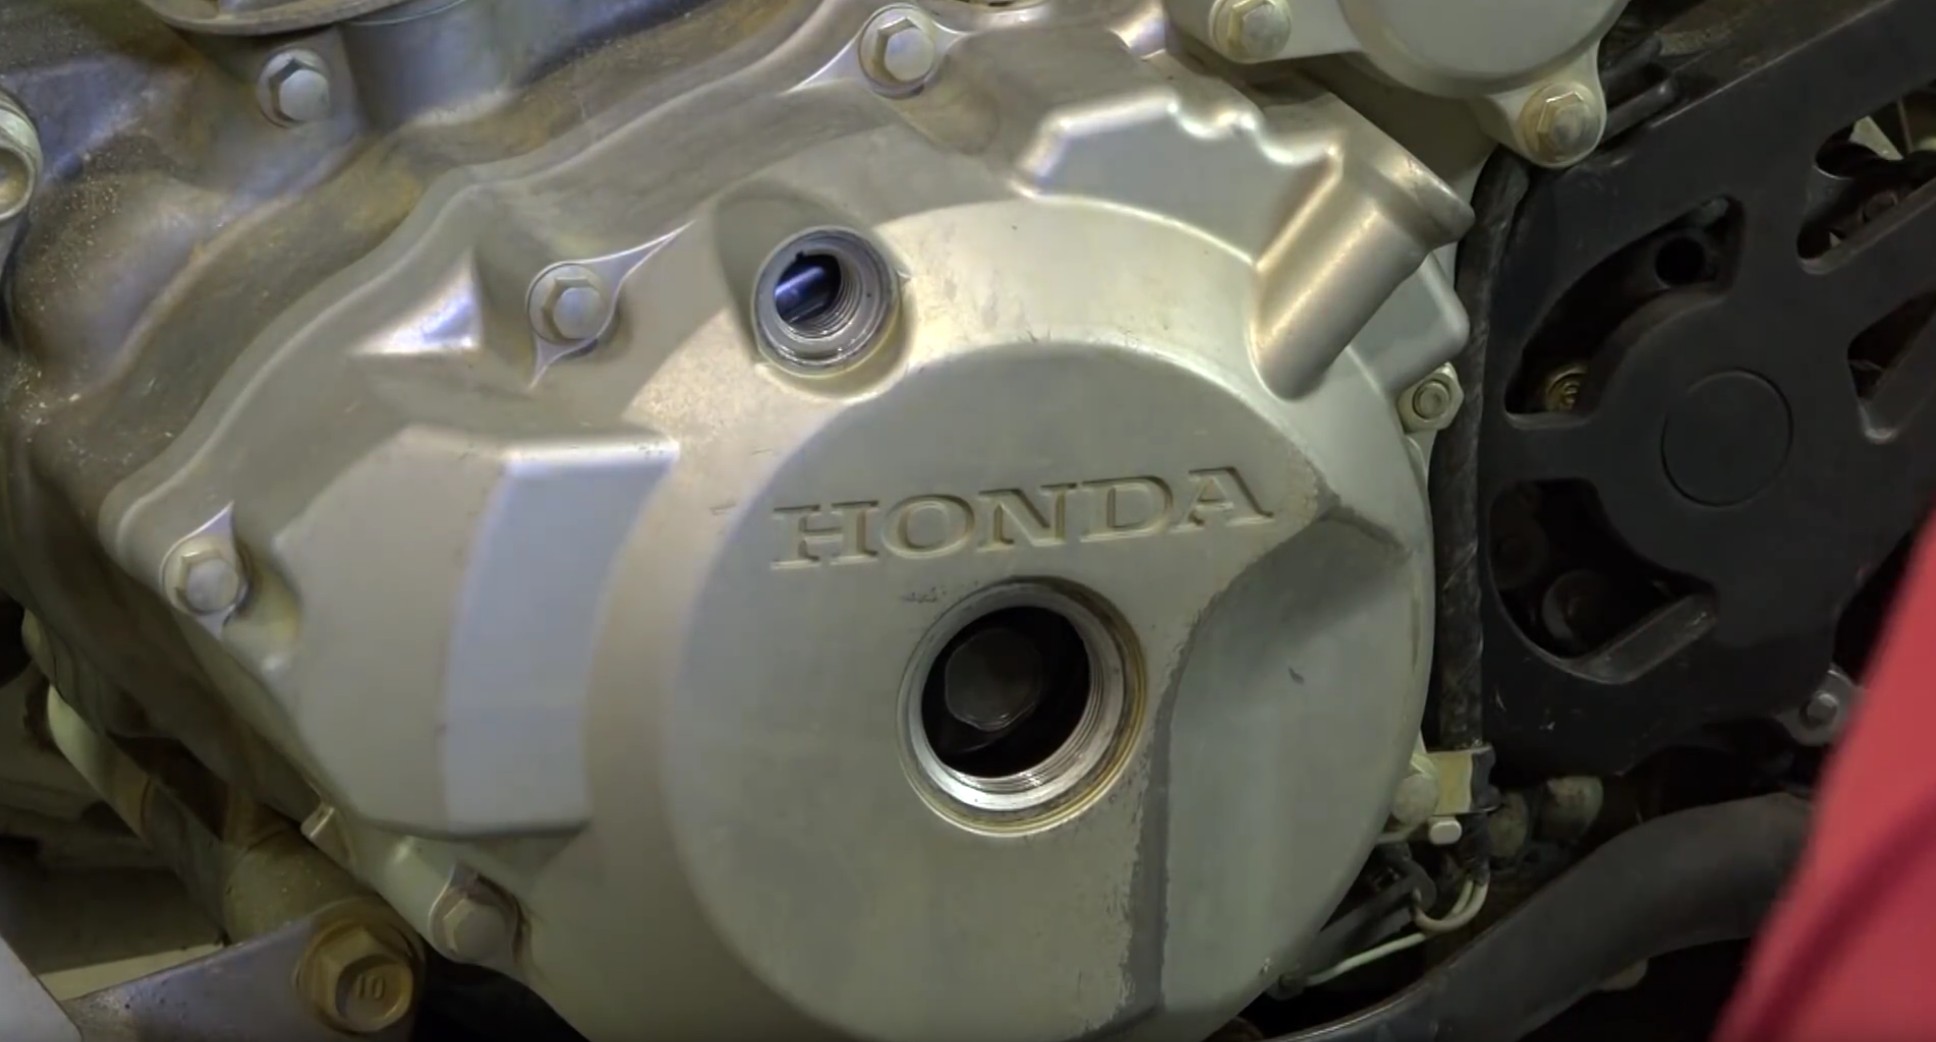 Honda TRX400 crankcase